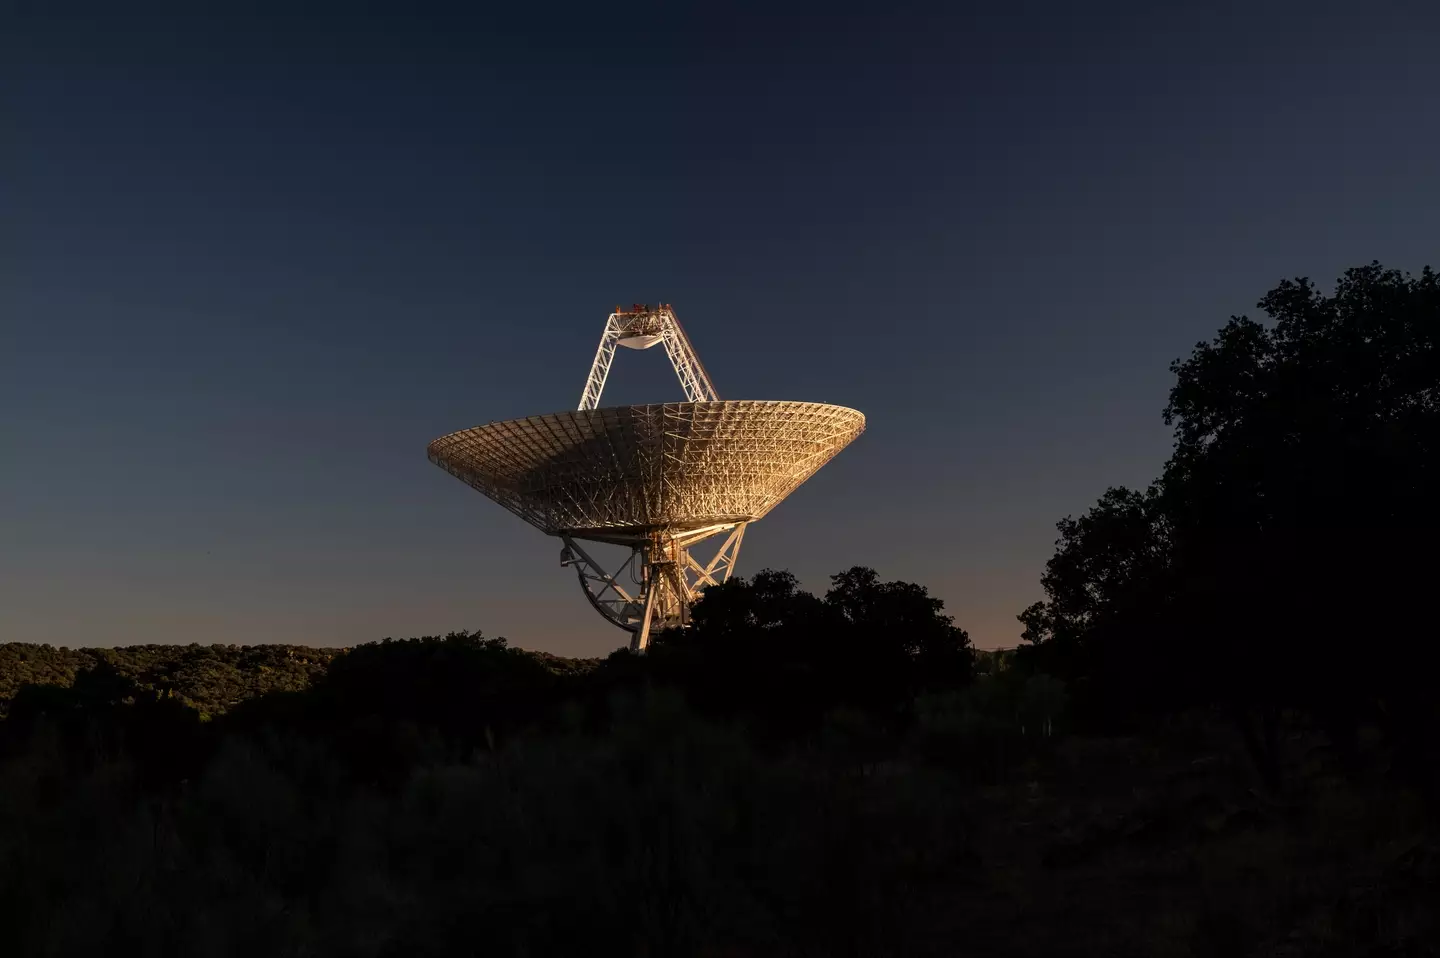 The radio signal took 8 billion years to reach Earth